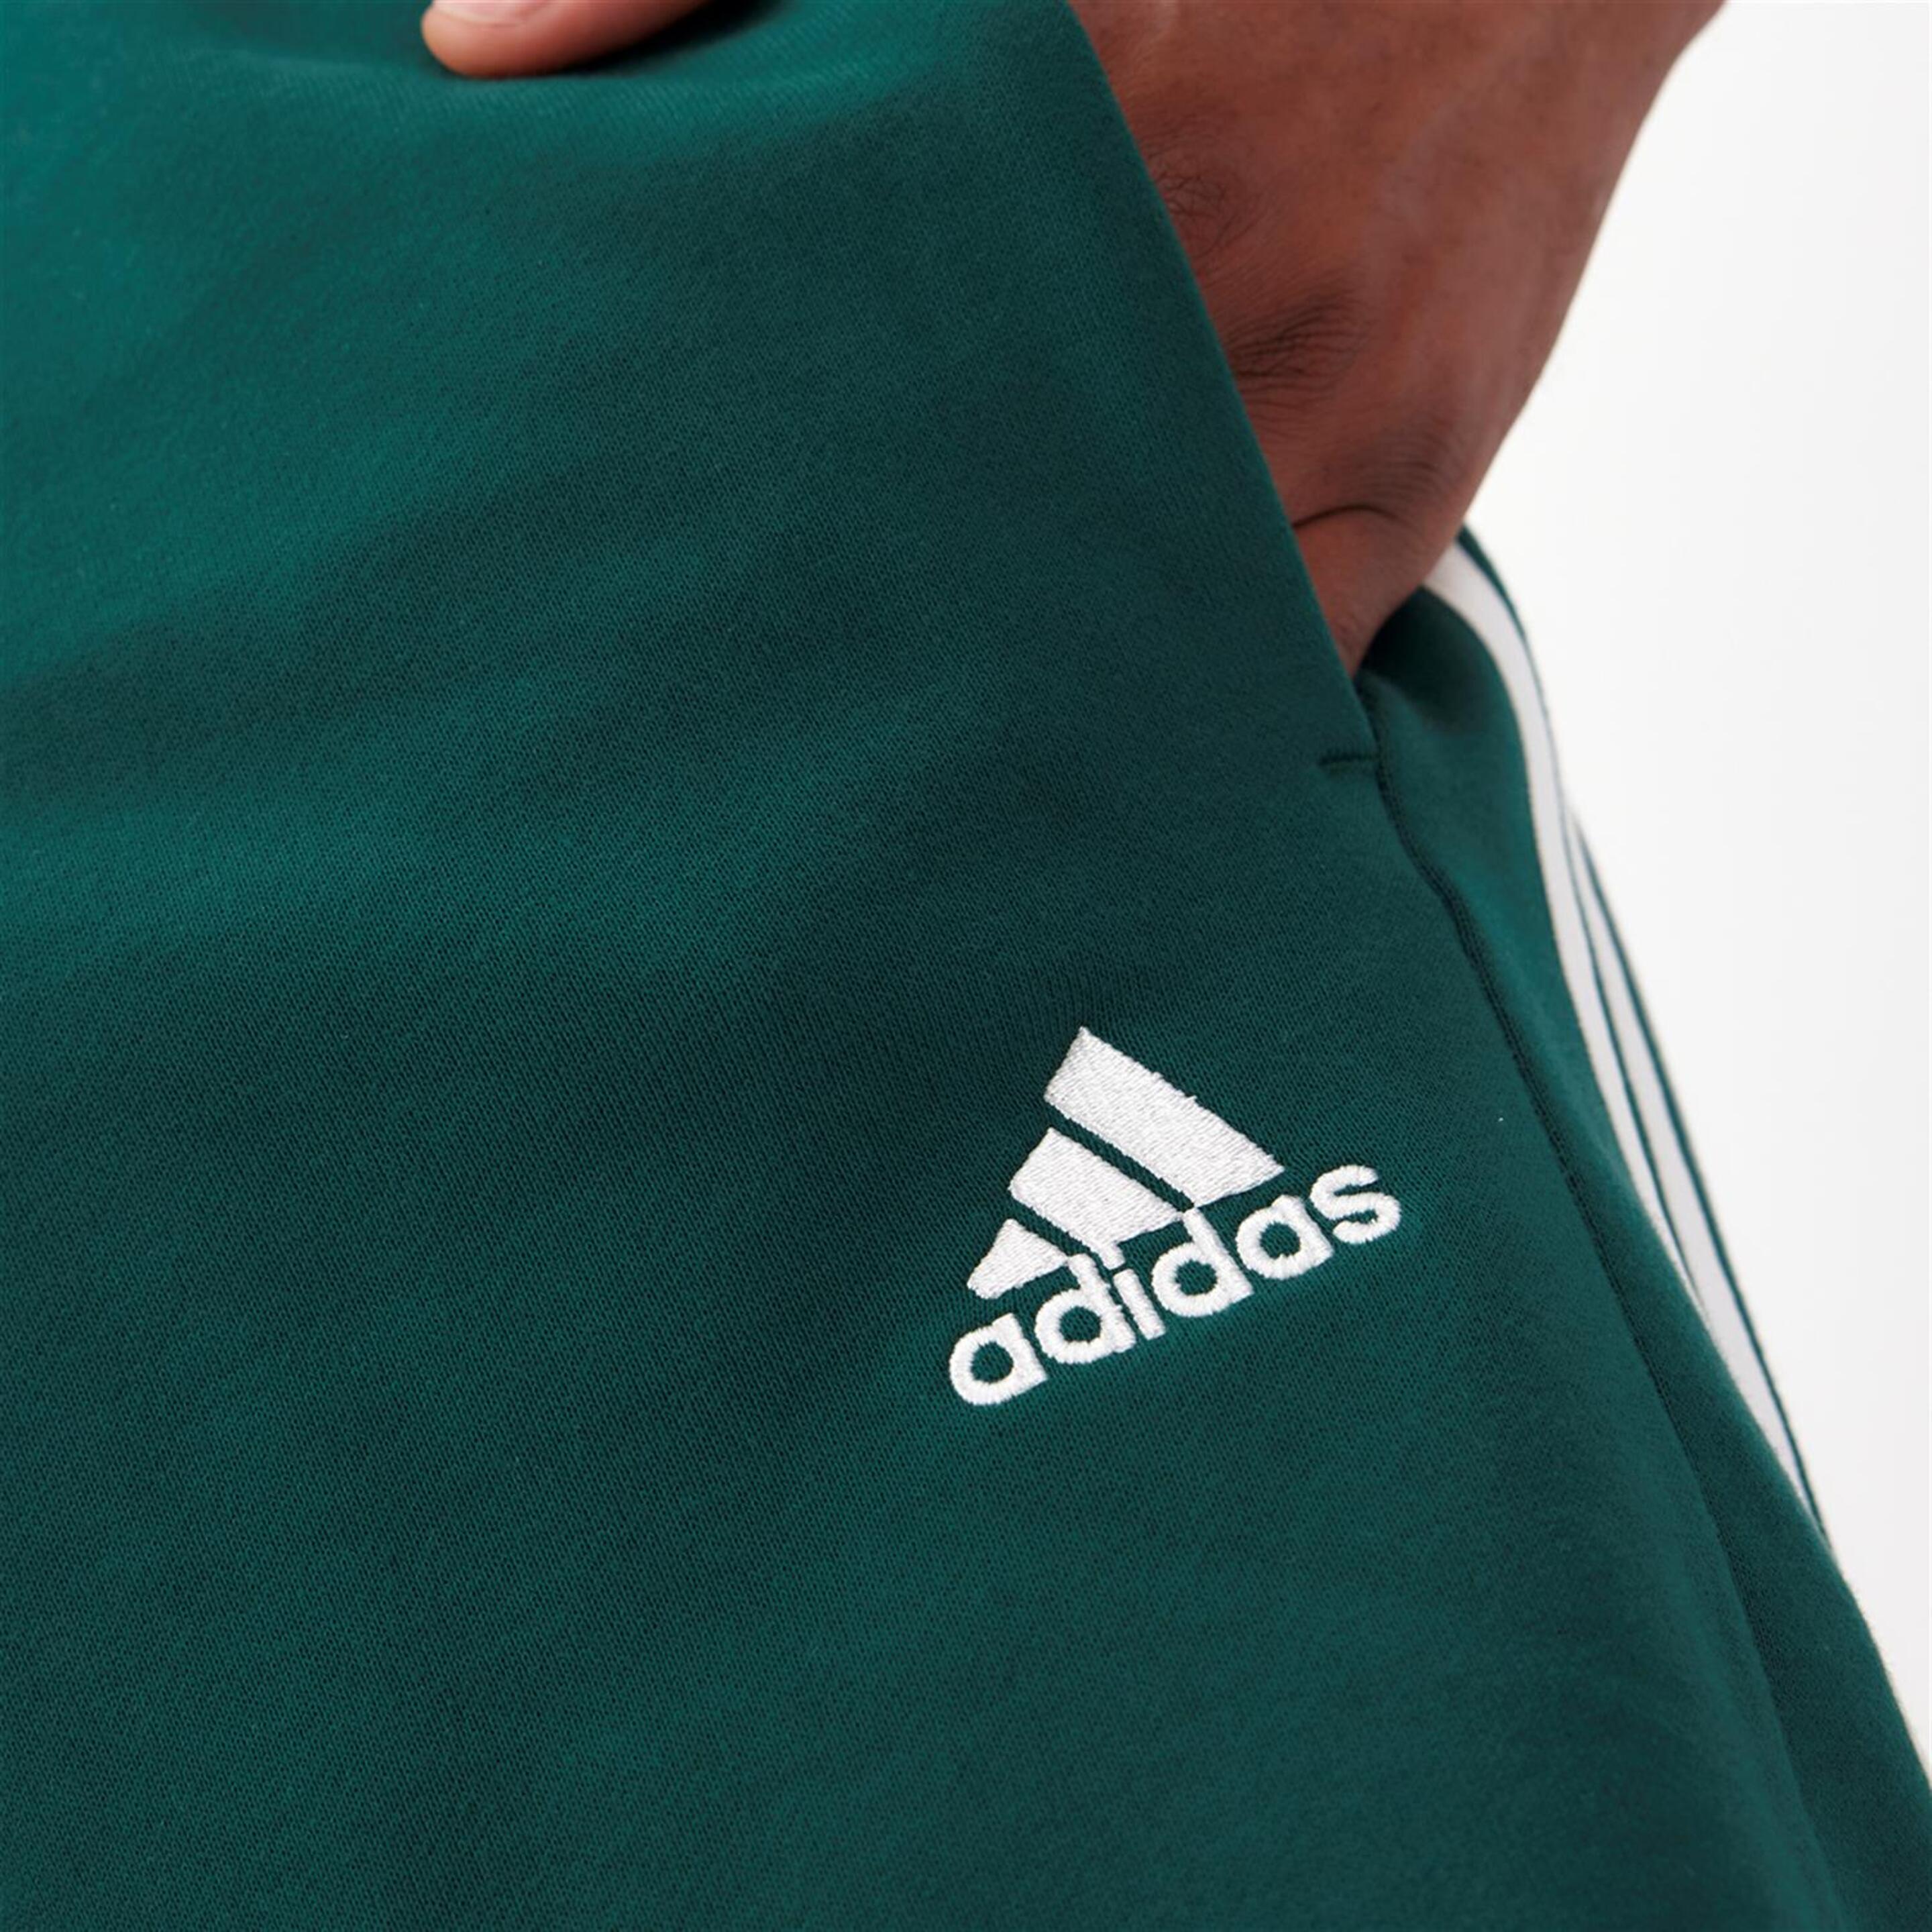 adidas 3S Multi - Verde - Pantalón Corto Hombre